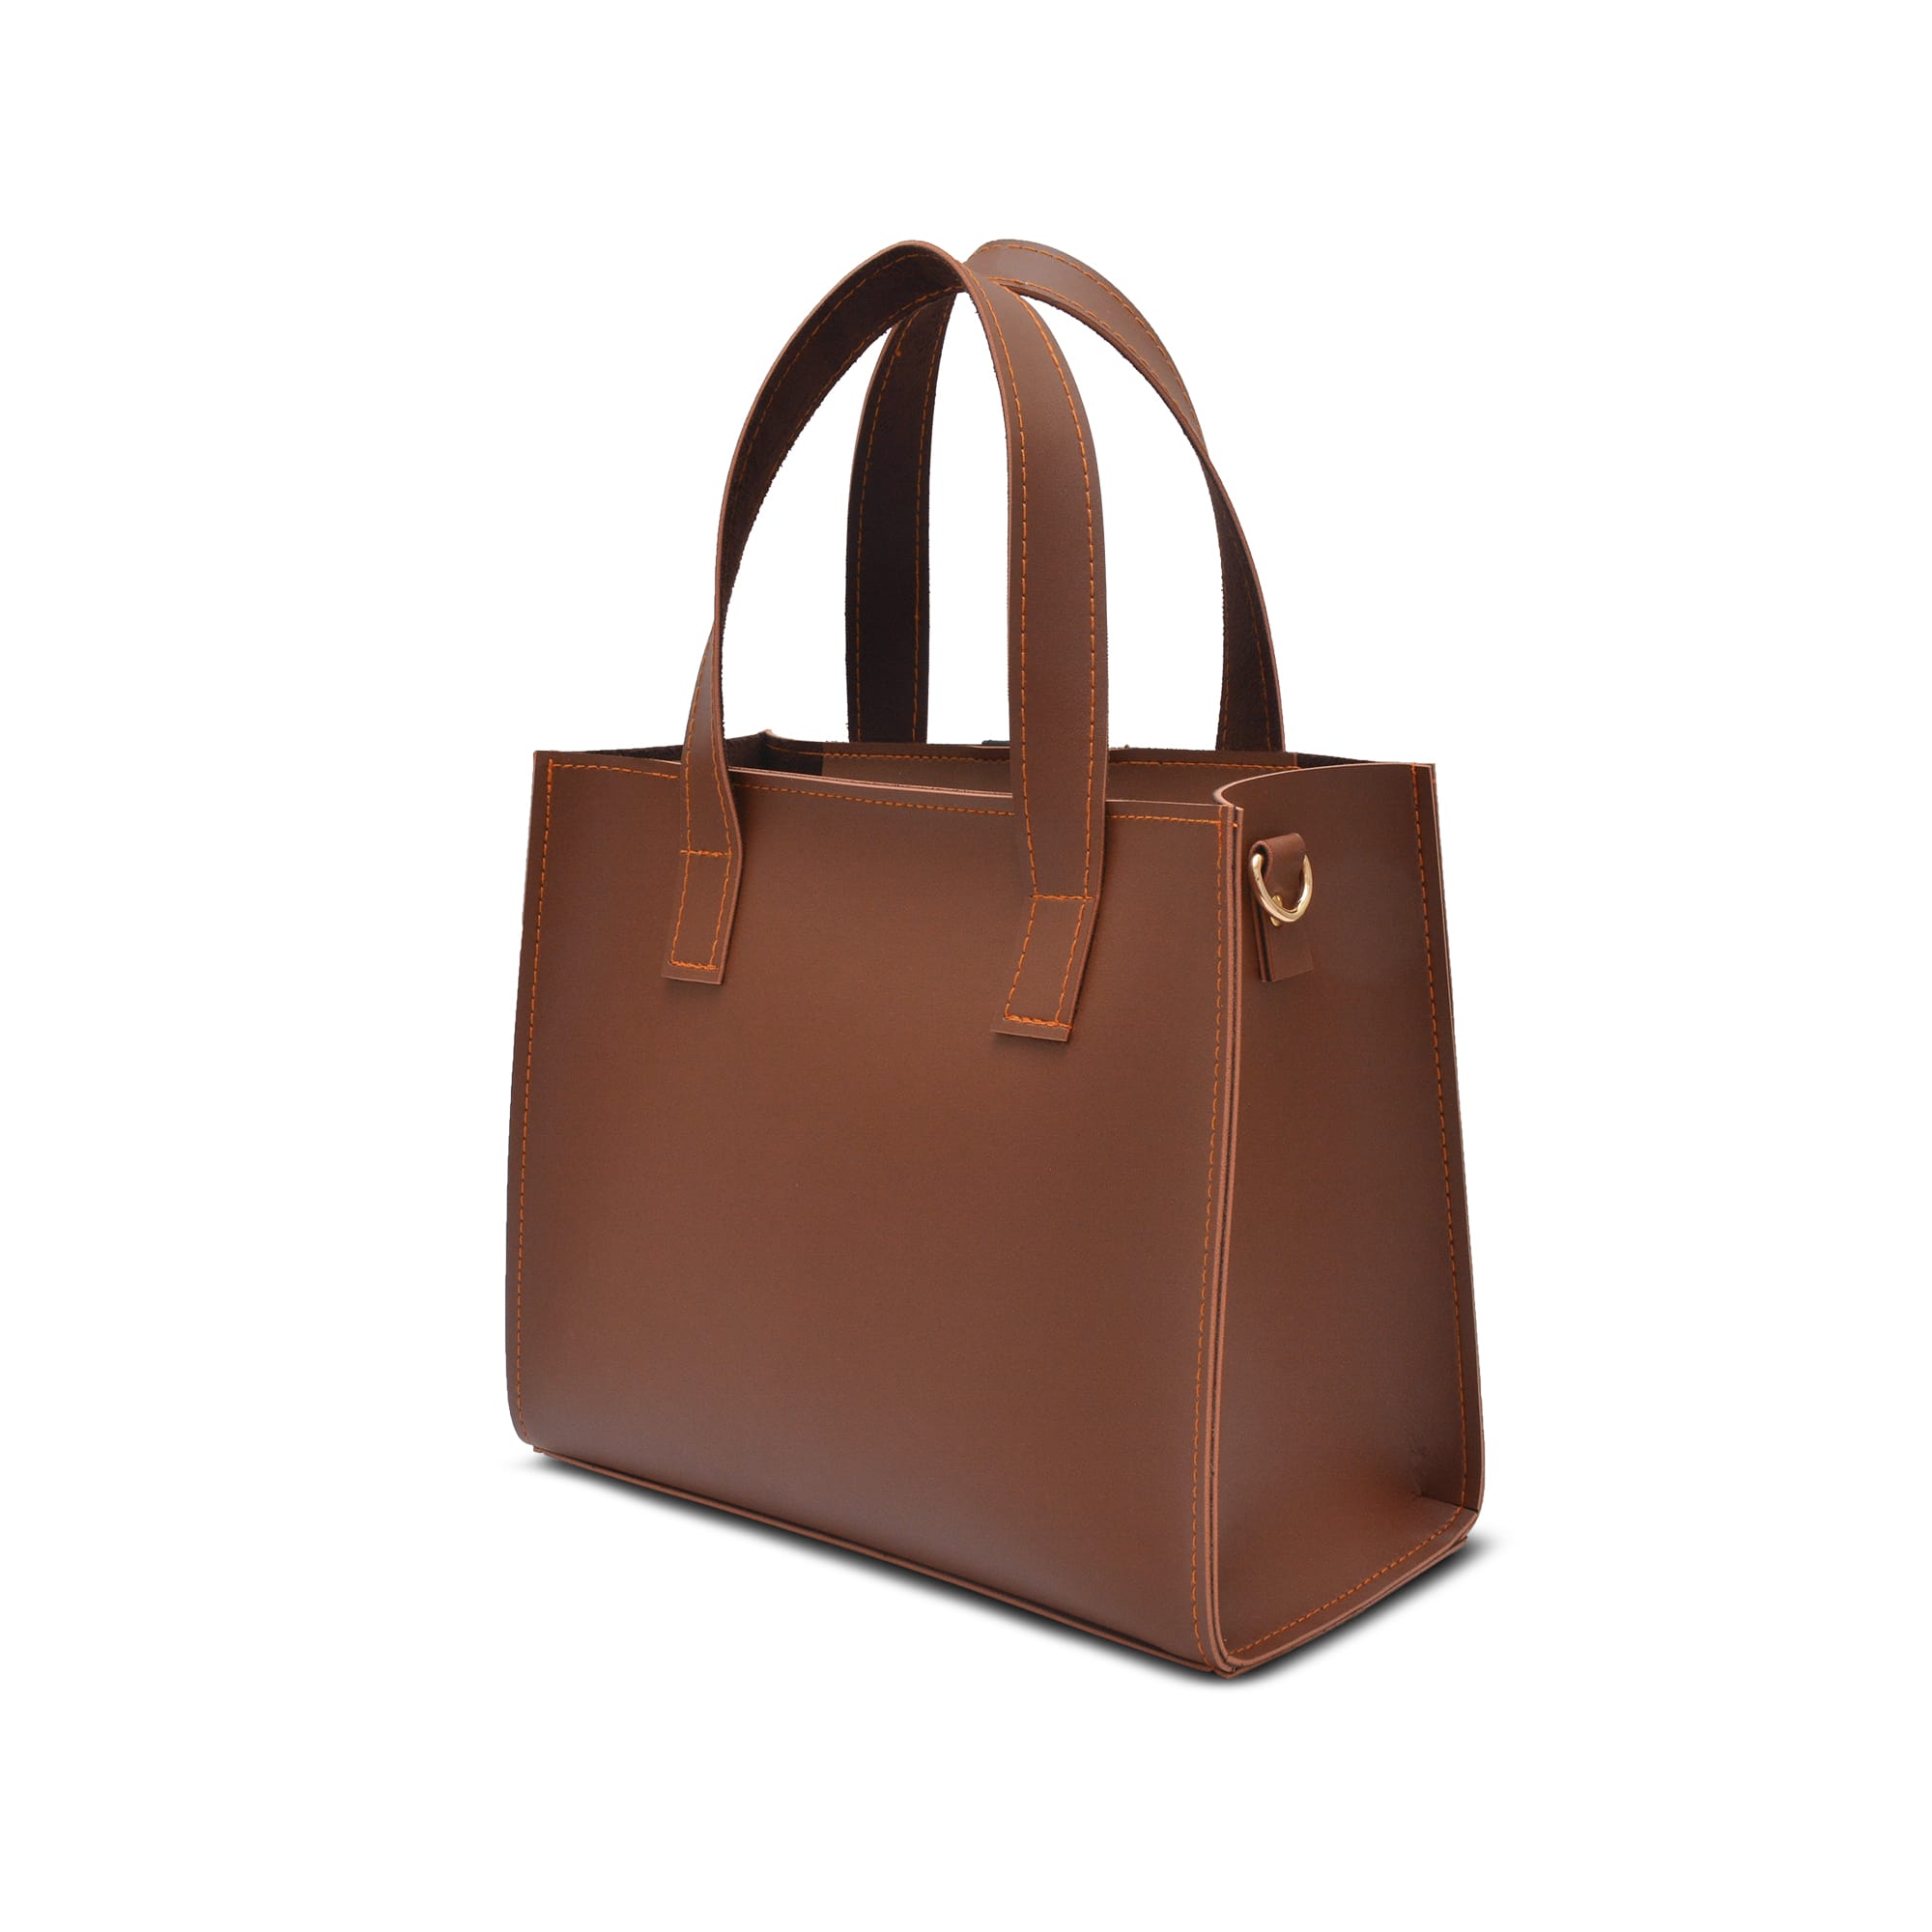 Shop Women Brown Strip Bag Online in Pakistan at AStore – Astore handbags